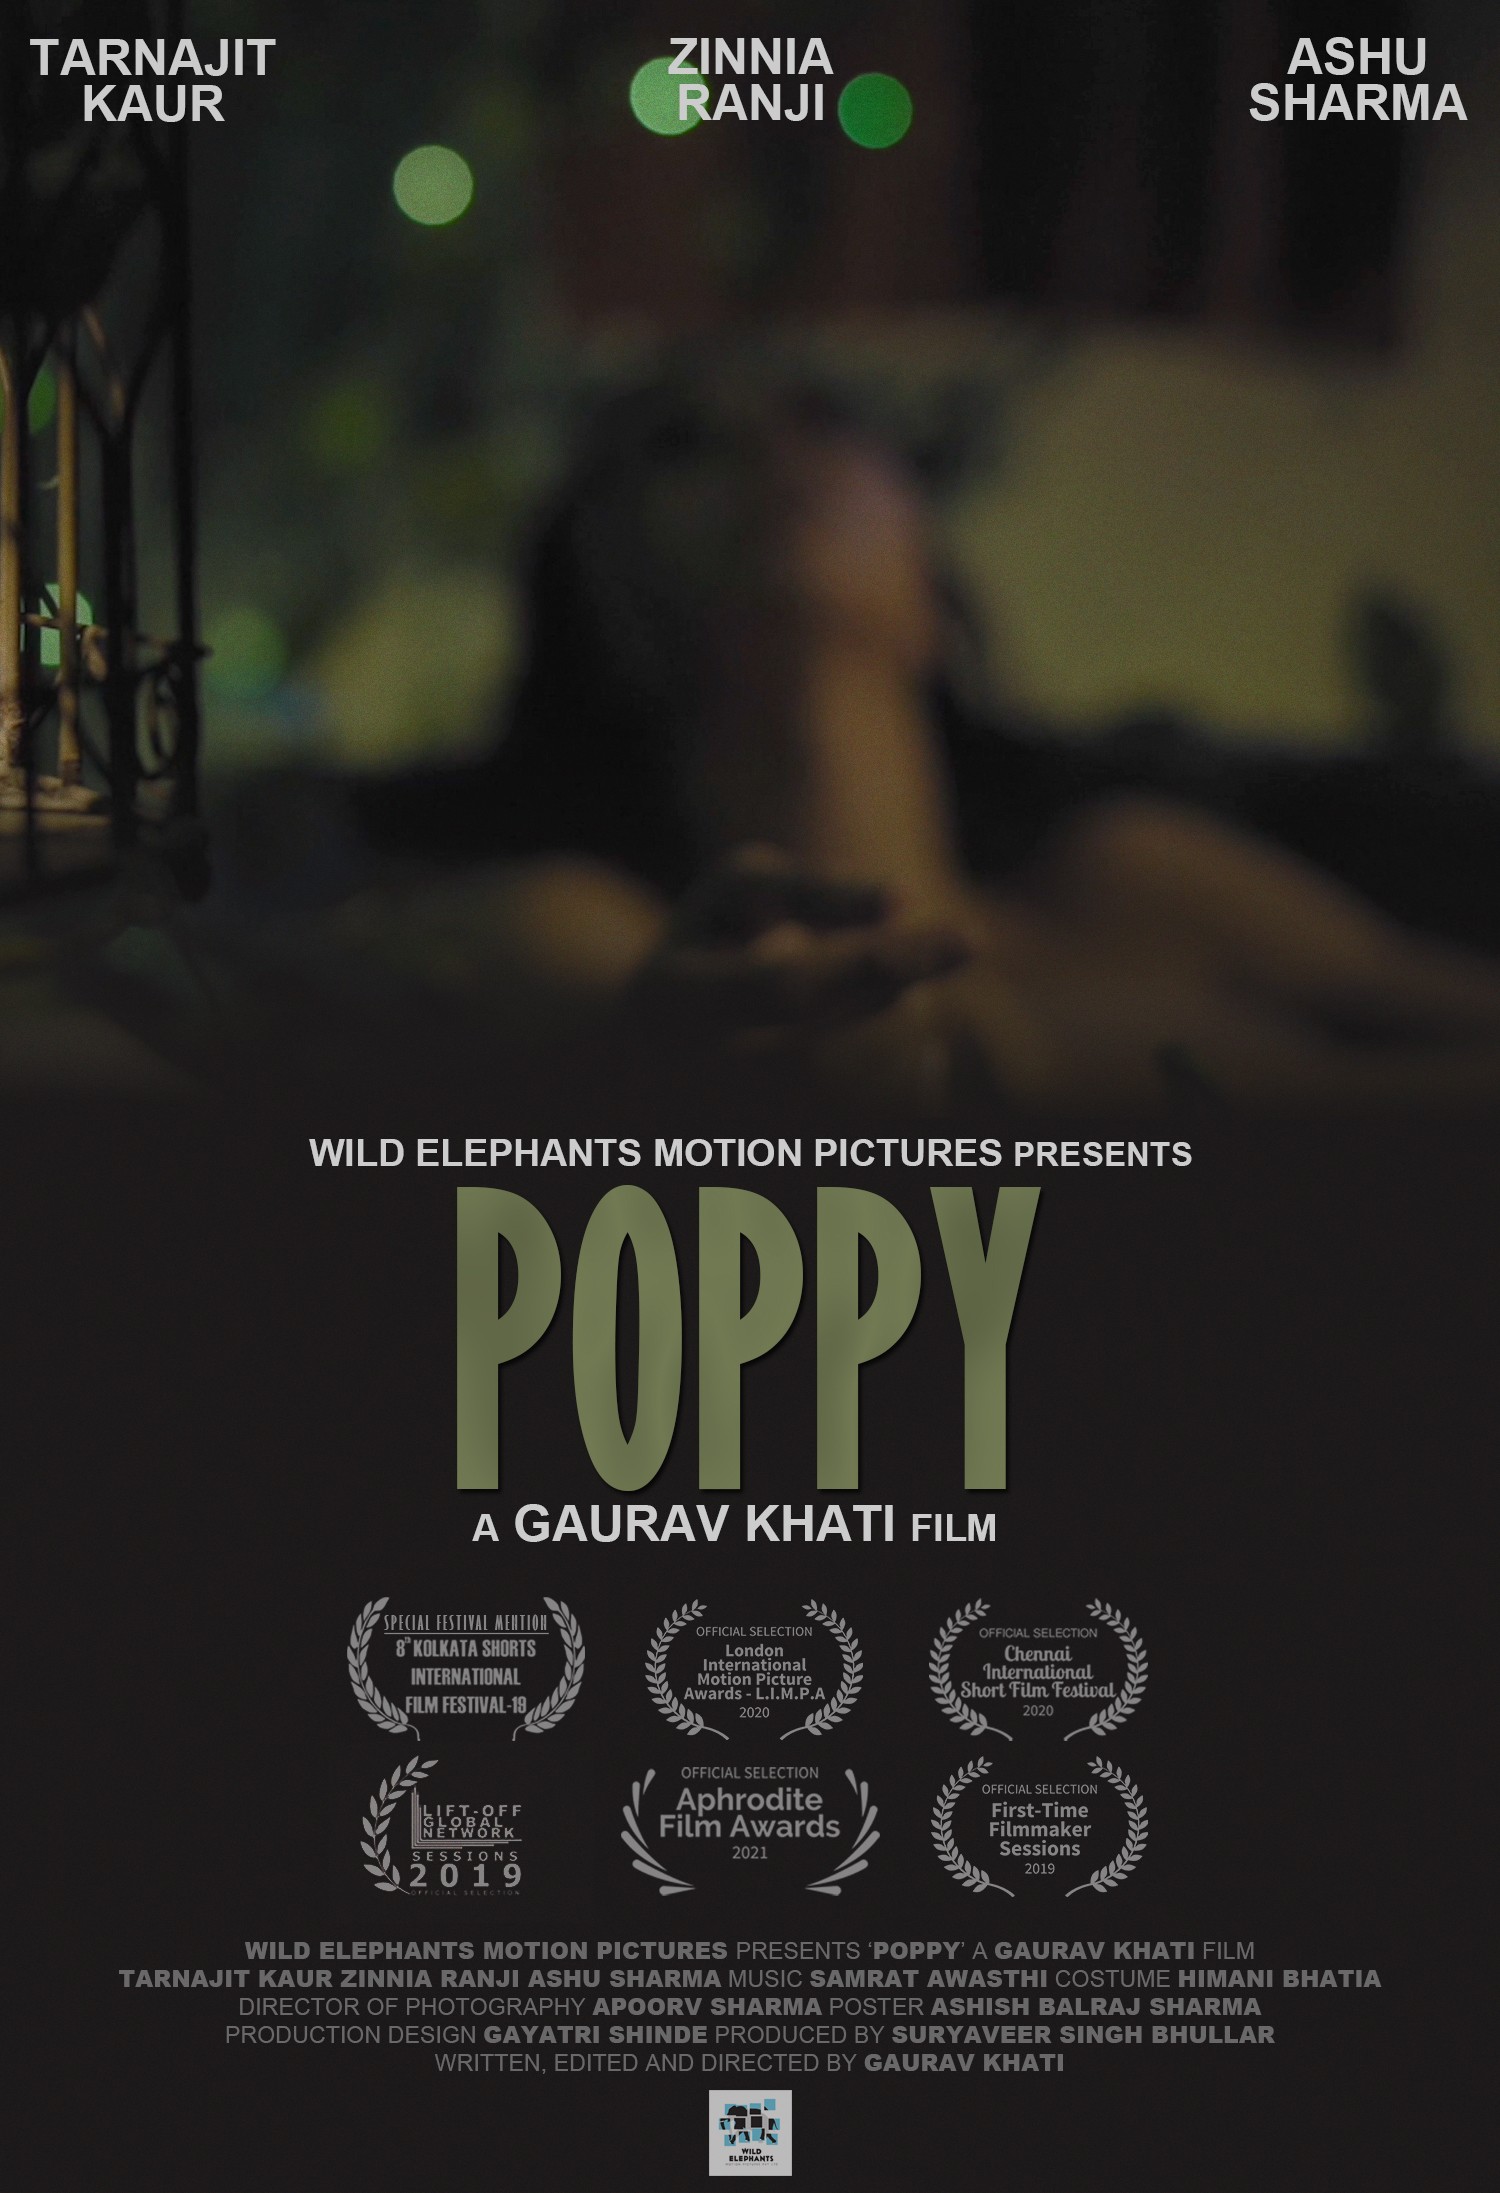 Mega Sized Movie Poster Image for Poppy